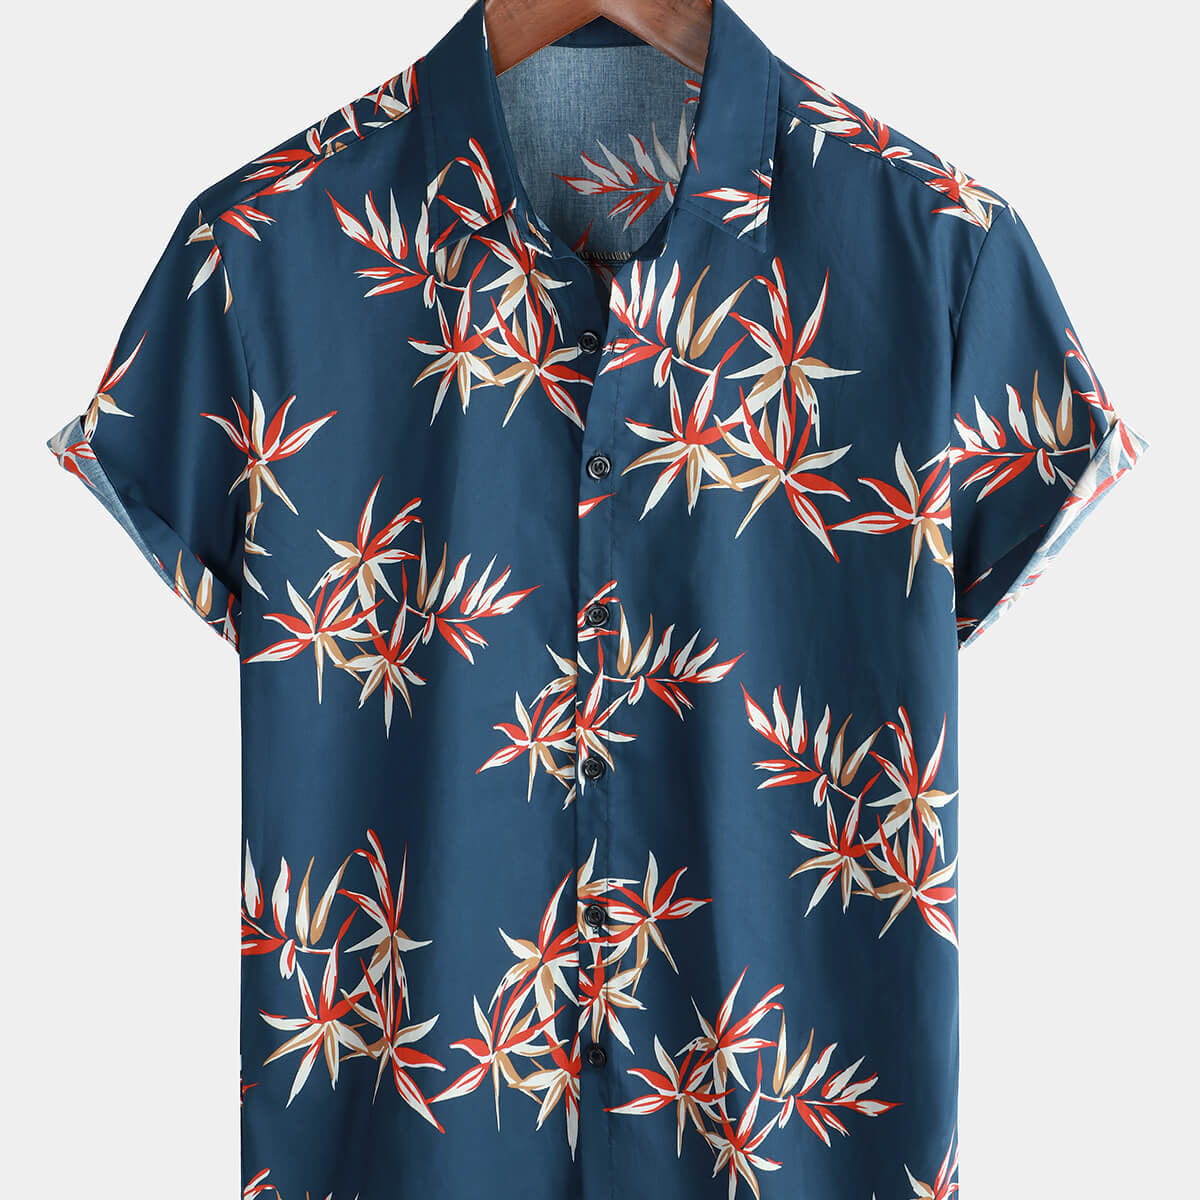 Men's Floral Hawaiian Holiday Casual Summer Short Sleeve Button Up Shirt